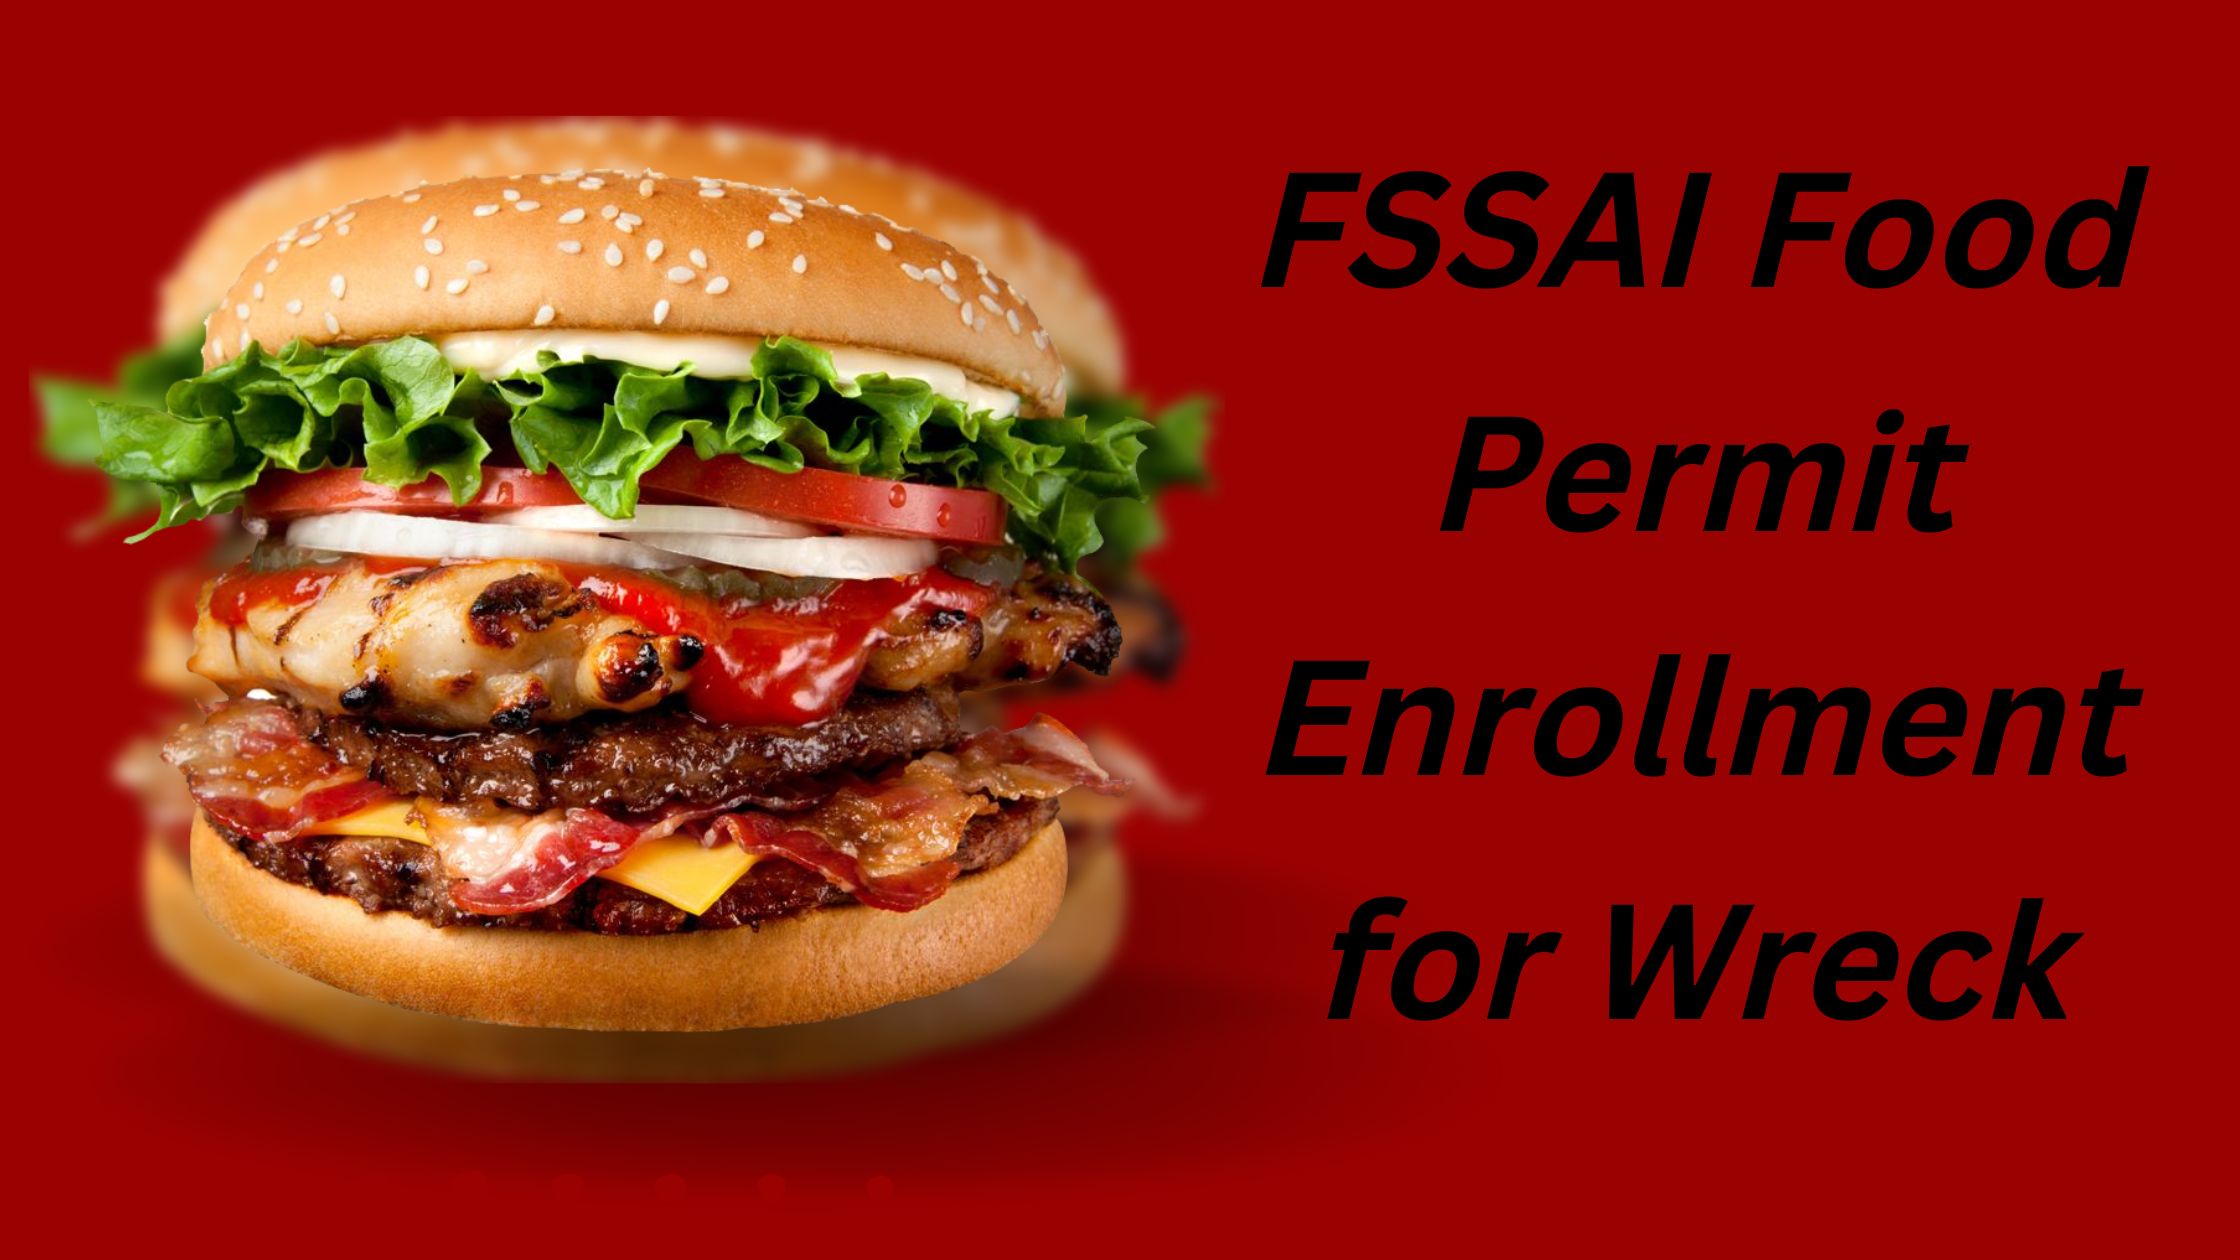 FSSAI Food Permit Enrollment for Wreck￼